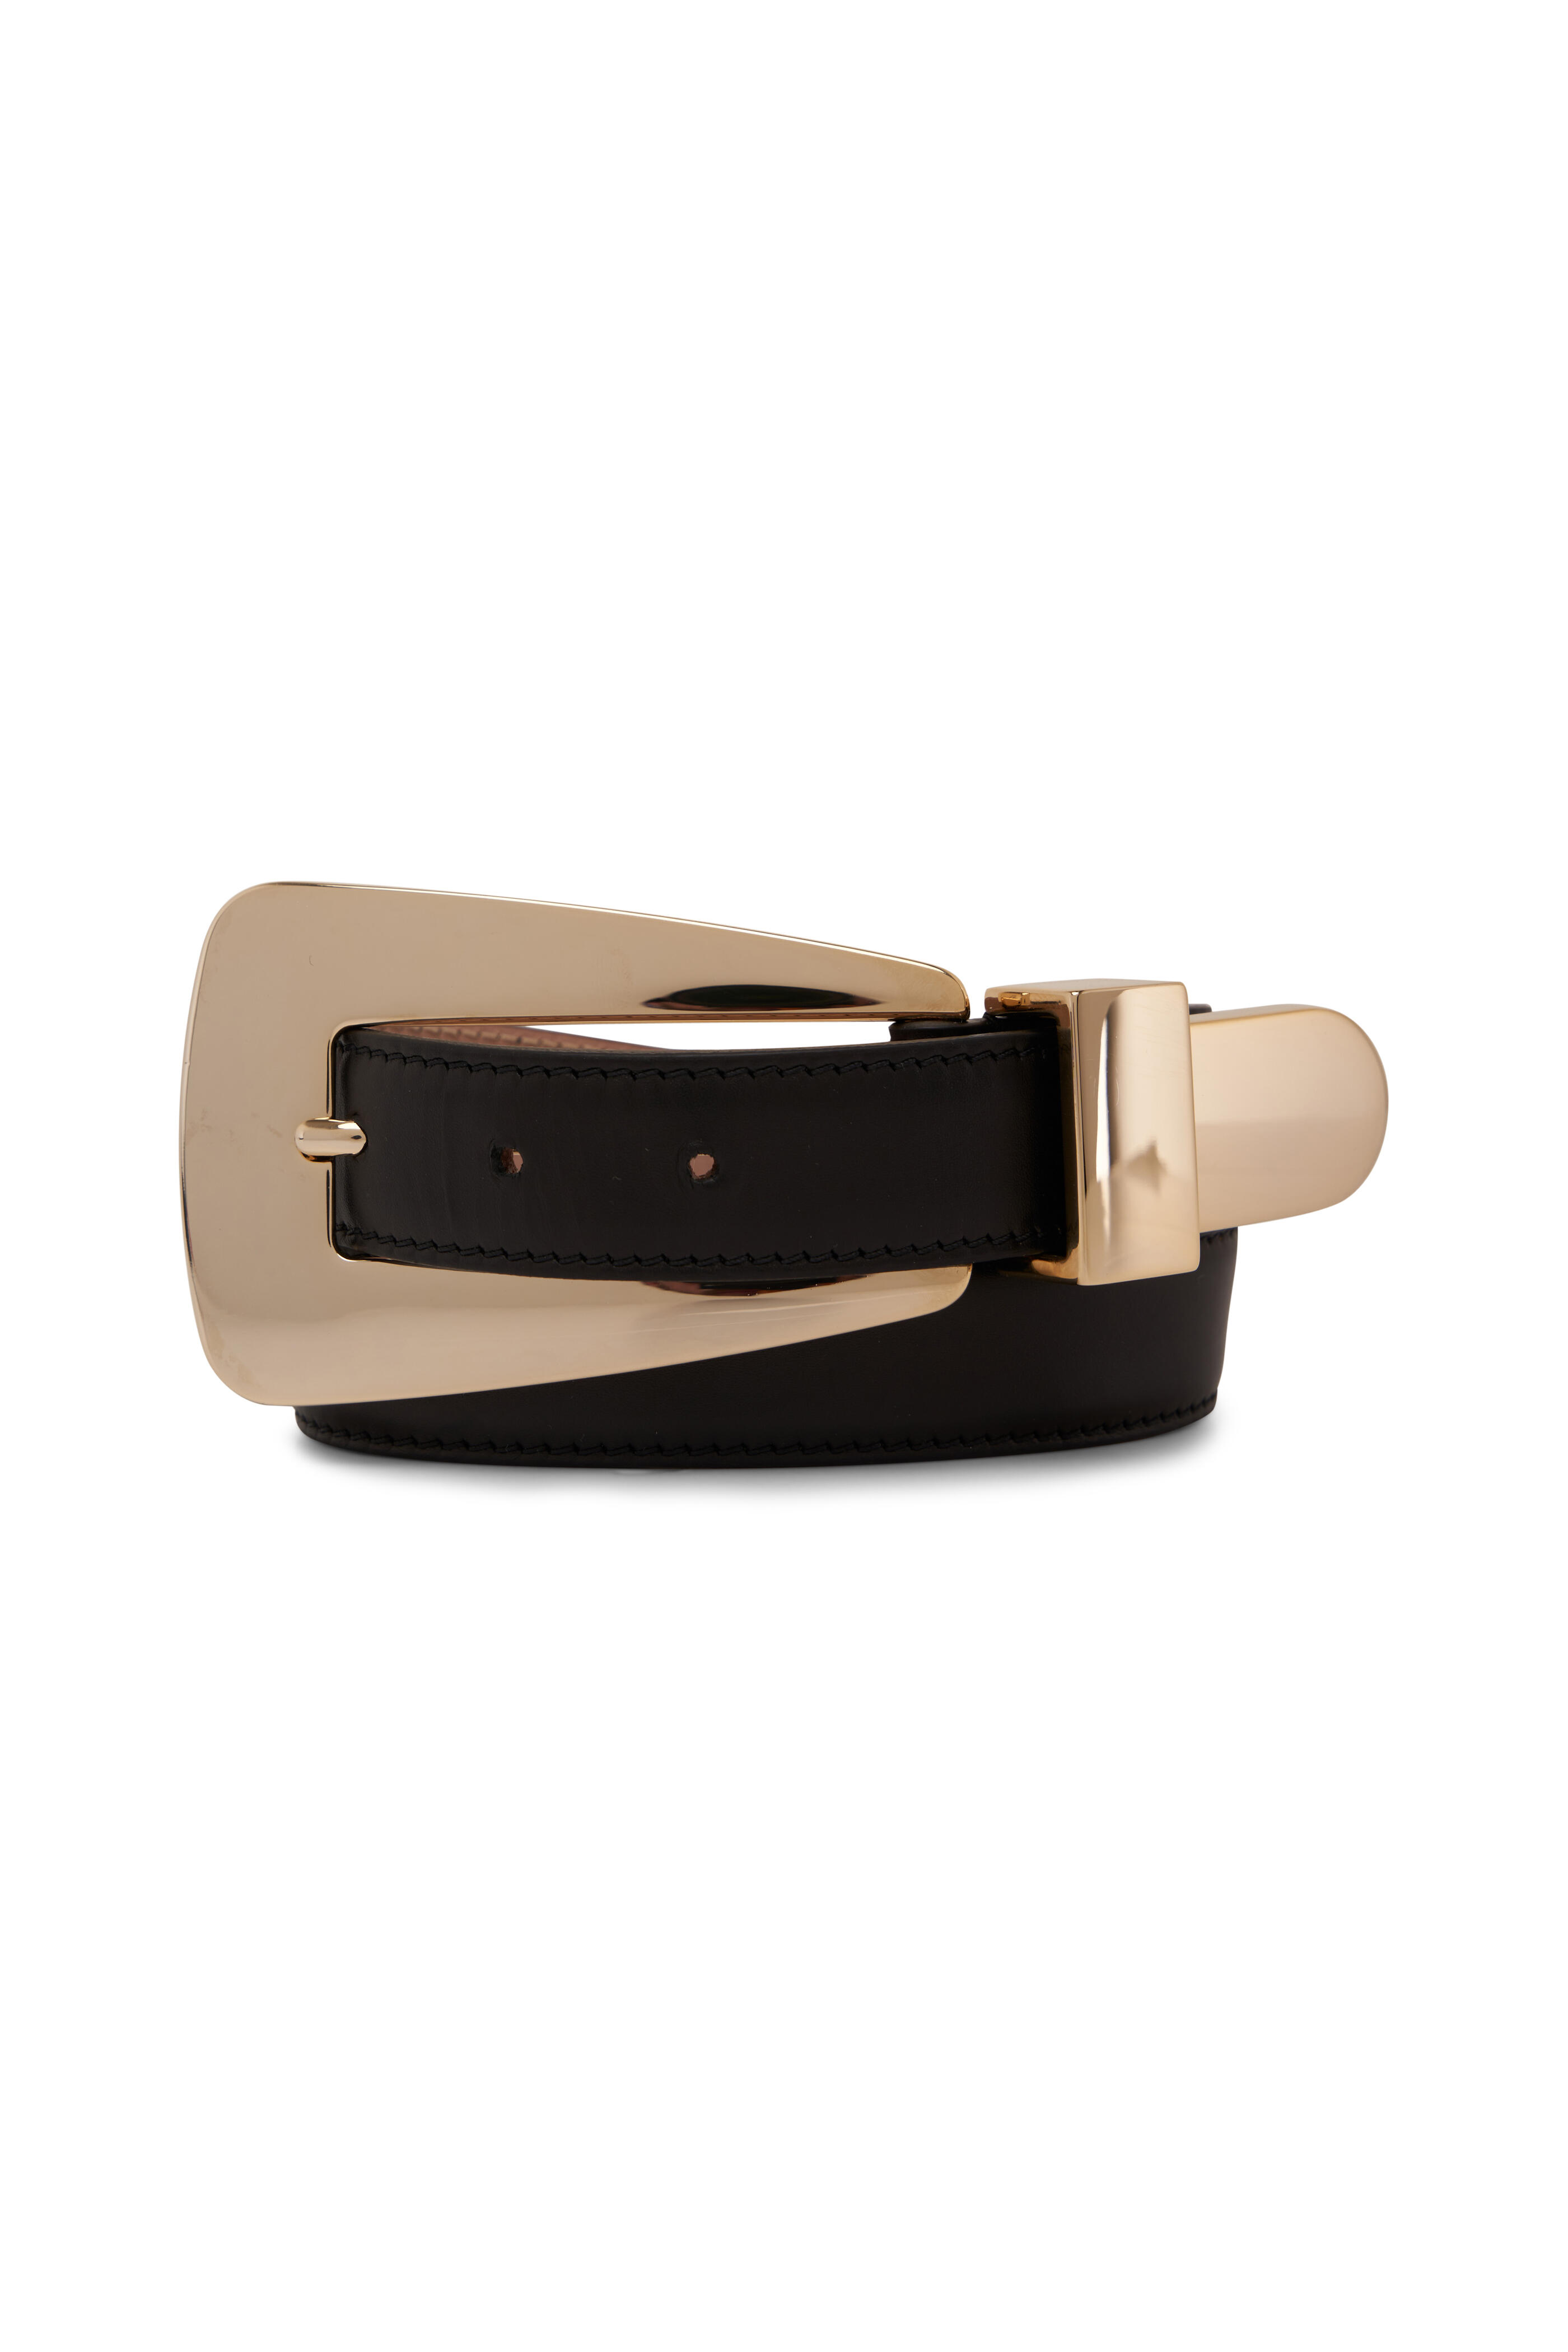 Khaite - Lucca Black Leather & Gold Belt | Mitchell Stores